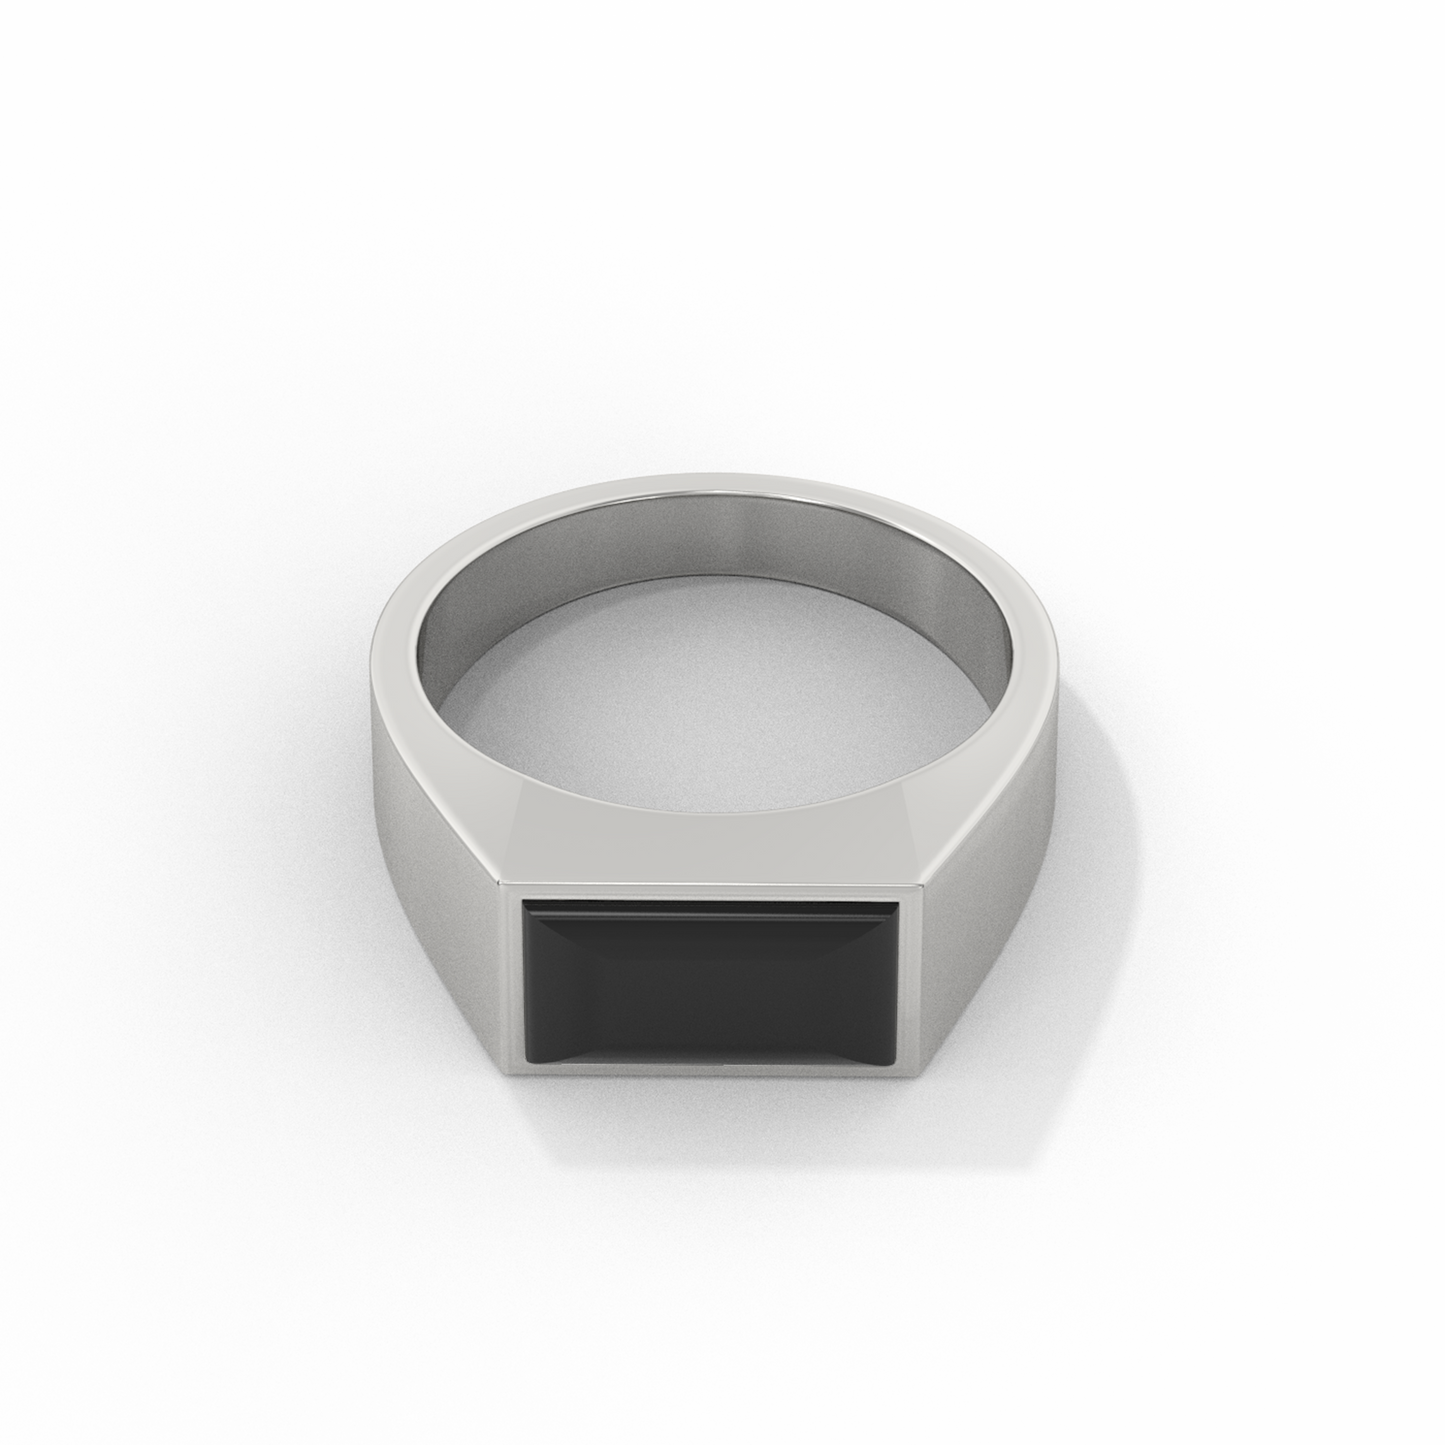 Rectangular Signet Ring Black Agate Sterling Silver